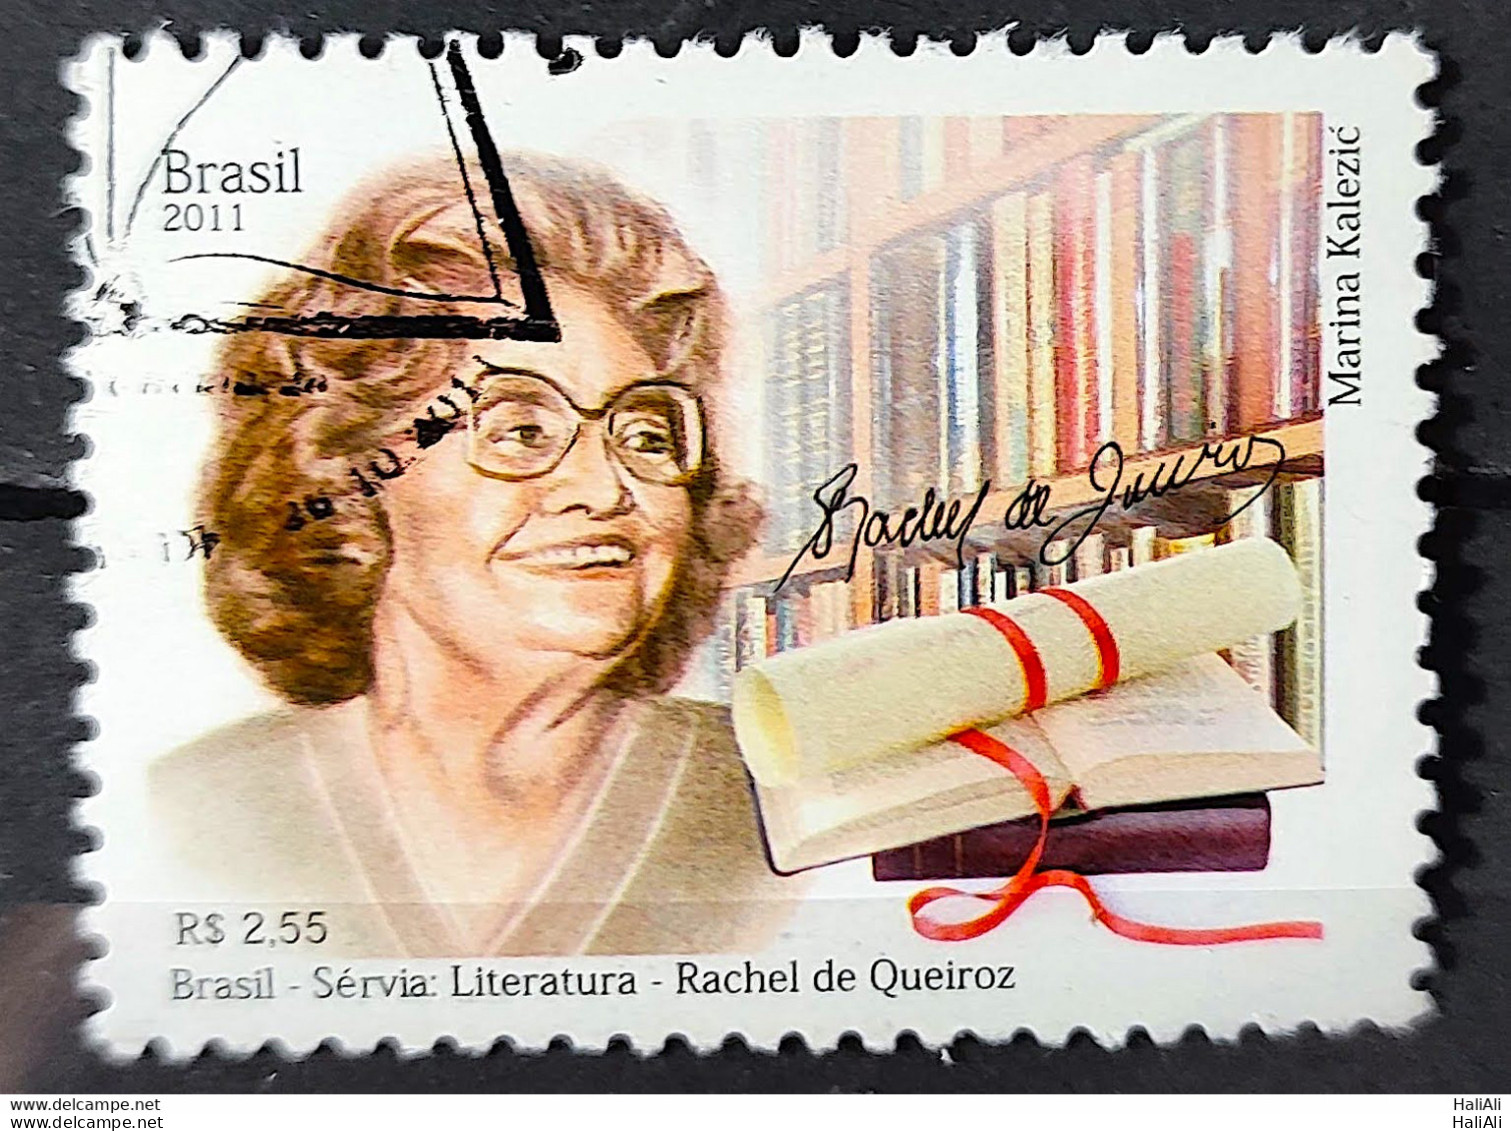 C 3149 Brazil Stamp Diplomatic Relations Servia Rachel De Queiroz Literature 2011 Circulated 1 - Usati